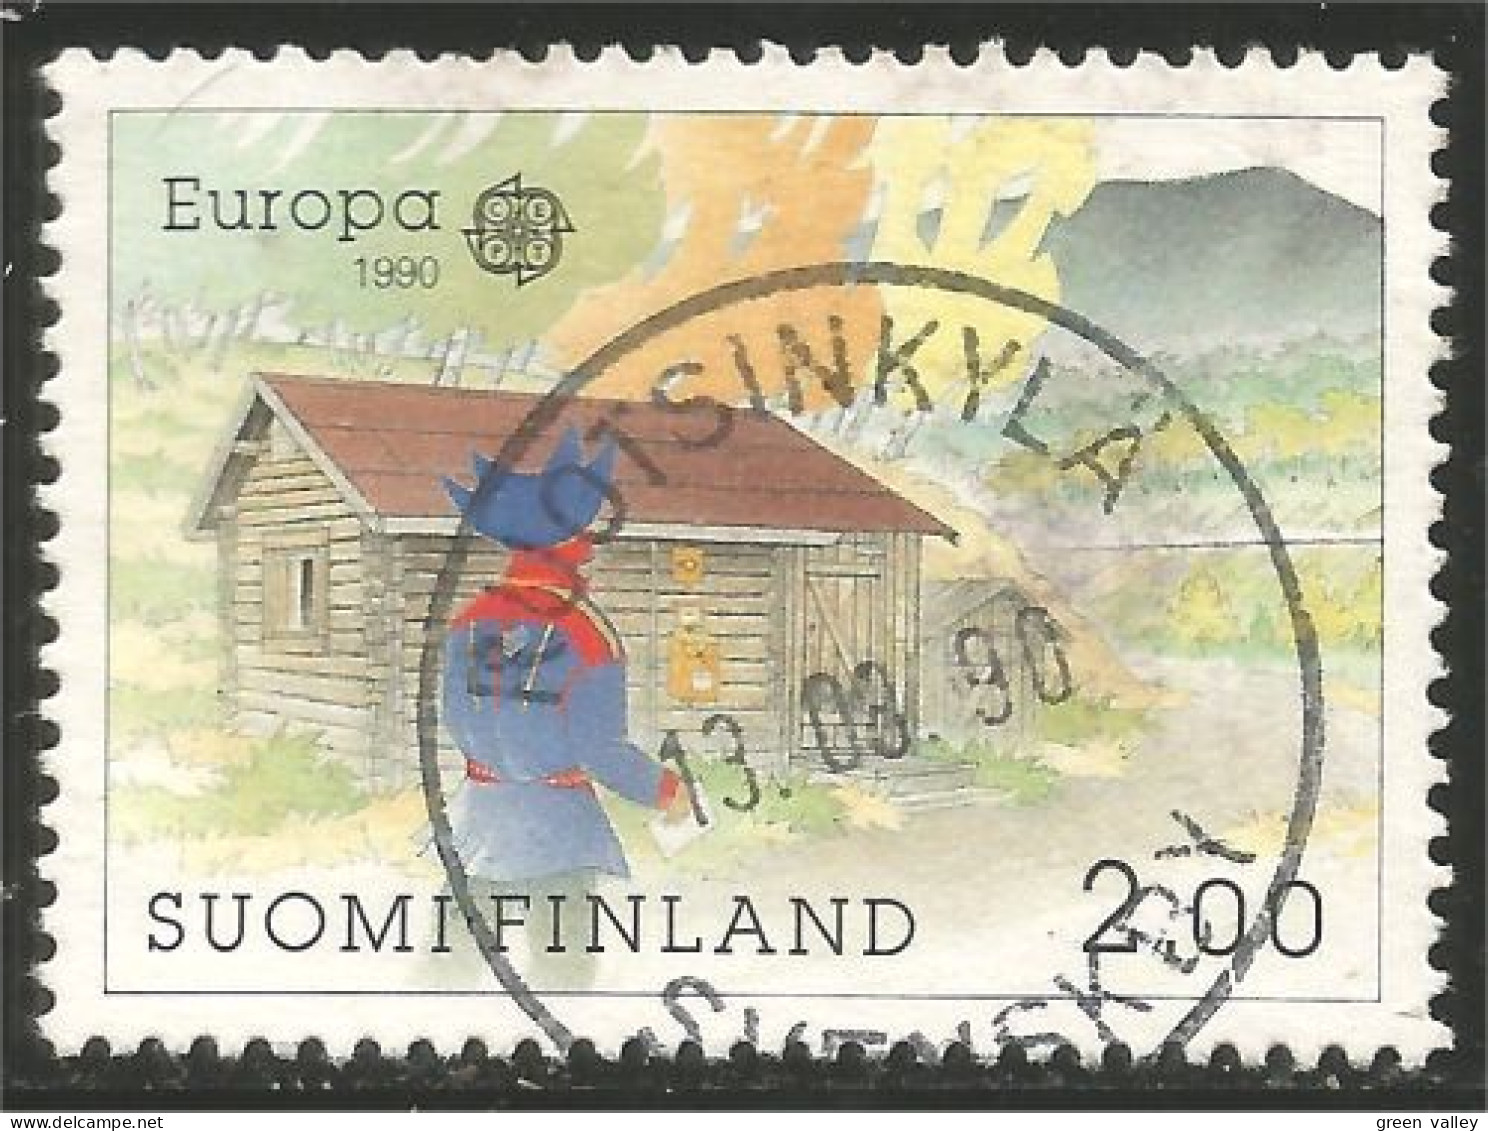 EU90-11a EUROPA-CEPT 1990 Finland RUOTSINKYLA Bureaux Postes Postal Houses - 1990